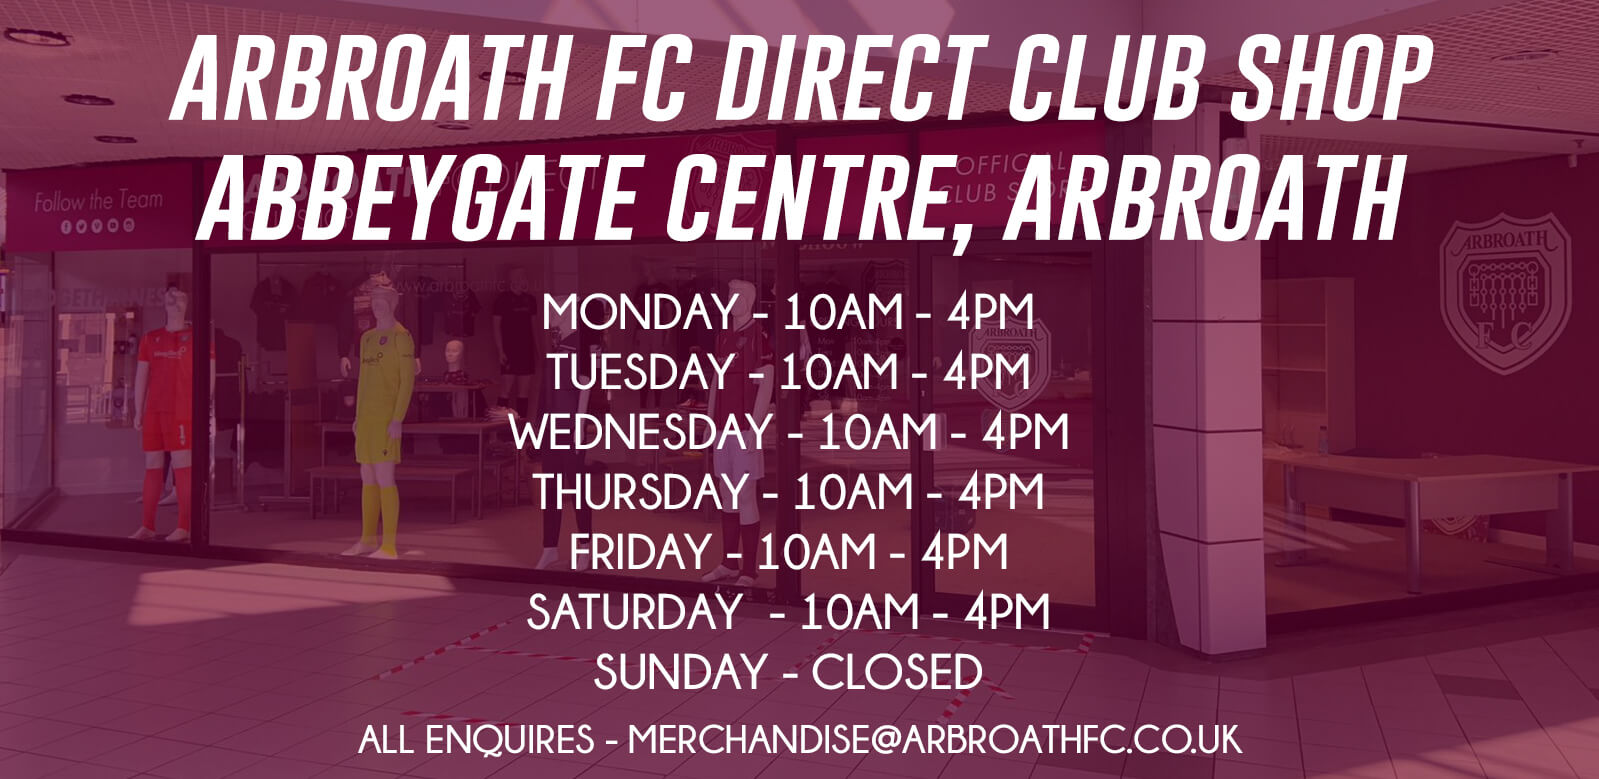 Arbroath FC in the Abbeygate - Arbroath FC